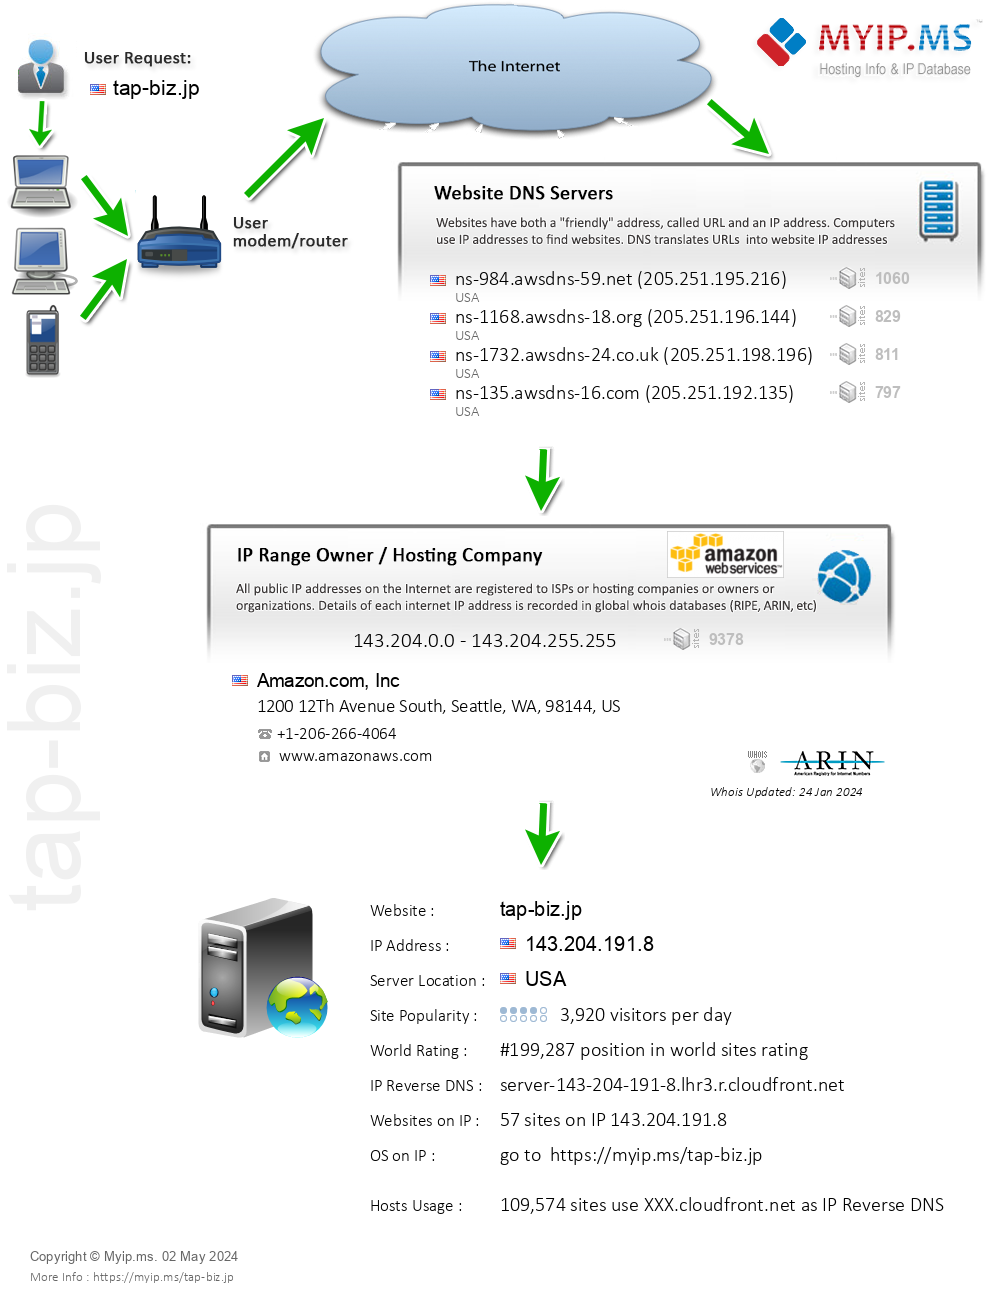 Tap-biz.jp - Website Hosting Visual IP Diagram